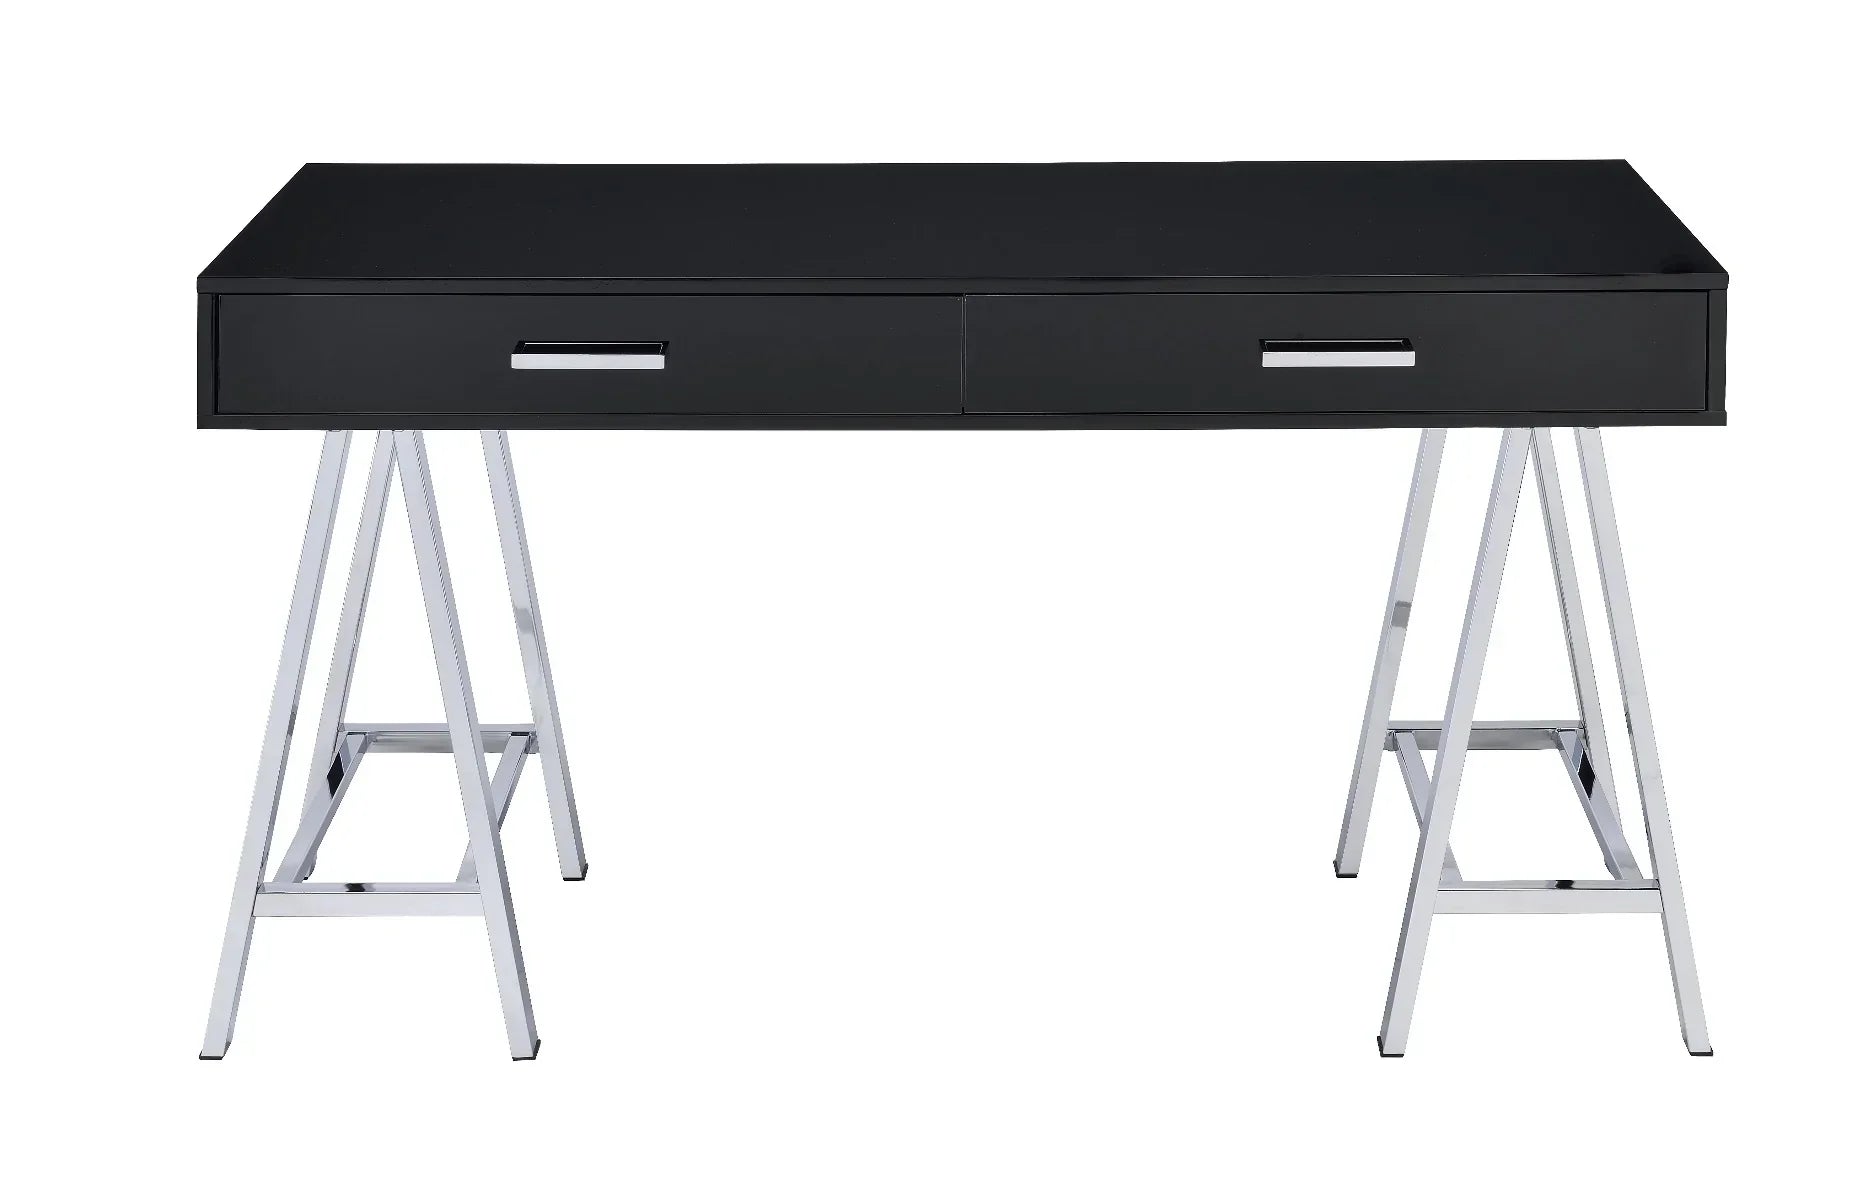 Coleen Black High Gloss & Chrome Finish Desk Model 93045 By ACME Furniture